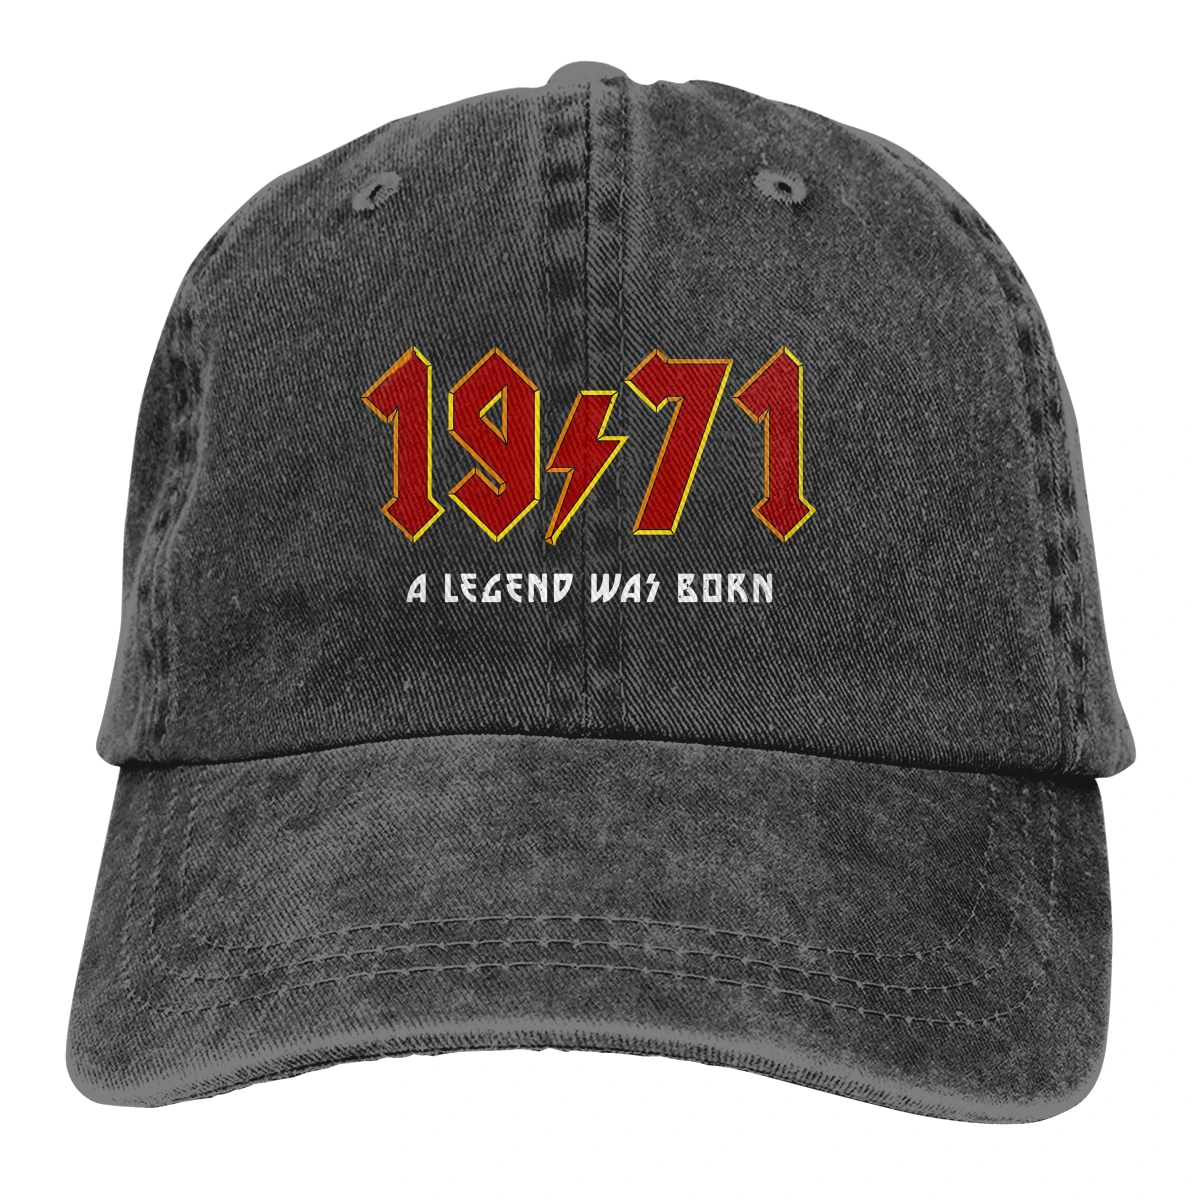 

1971 50th Anniversary Dad Granpa Multicolor Hat Peaked Women's Cap Still Rock Personalized Visor Protection Hats